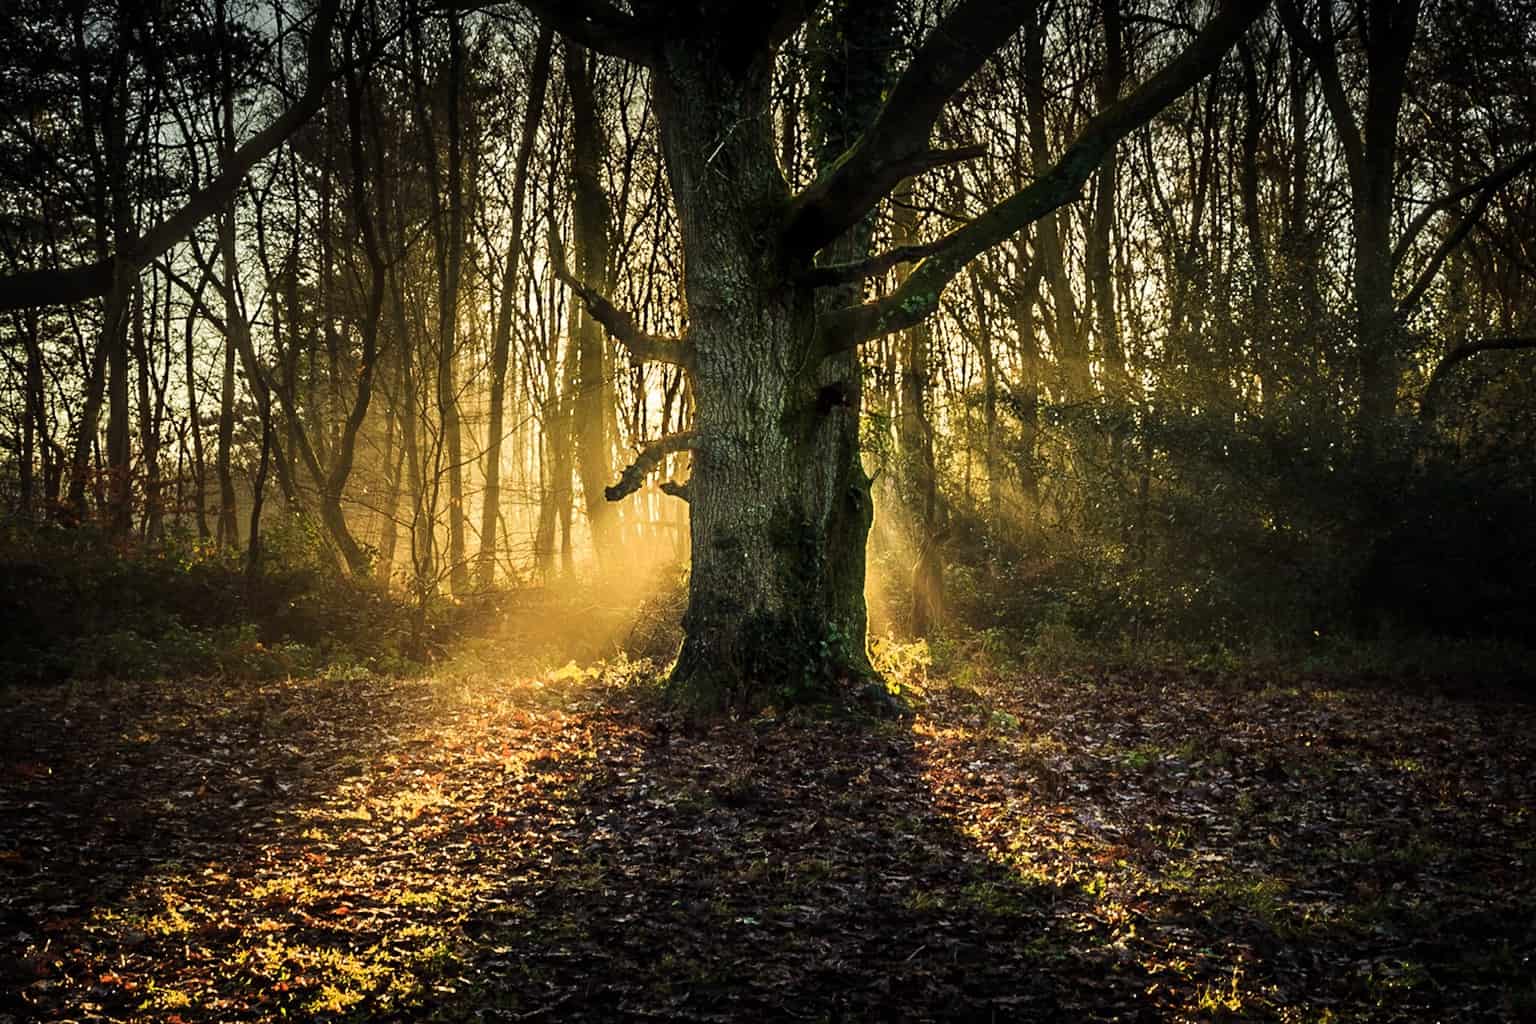  Tree by Rick McEvoy - fine art landscape photographer in Poole 